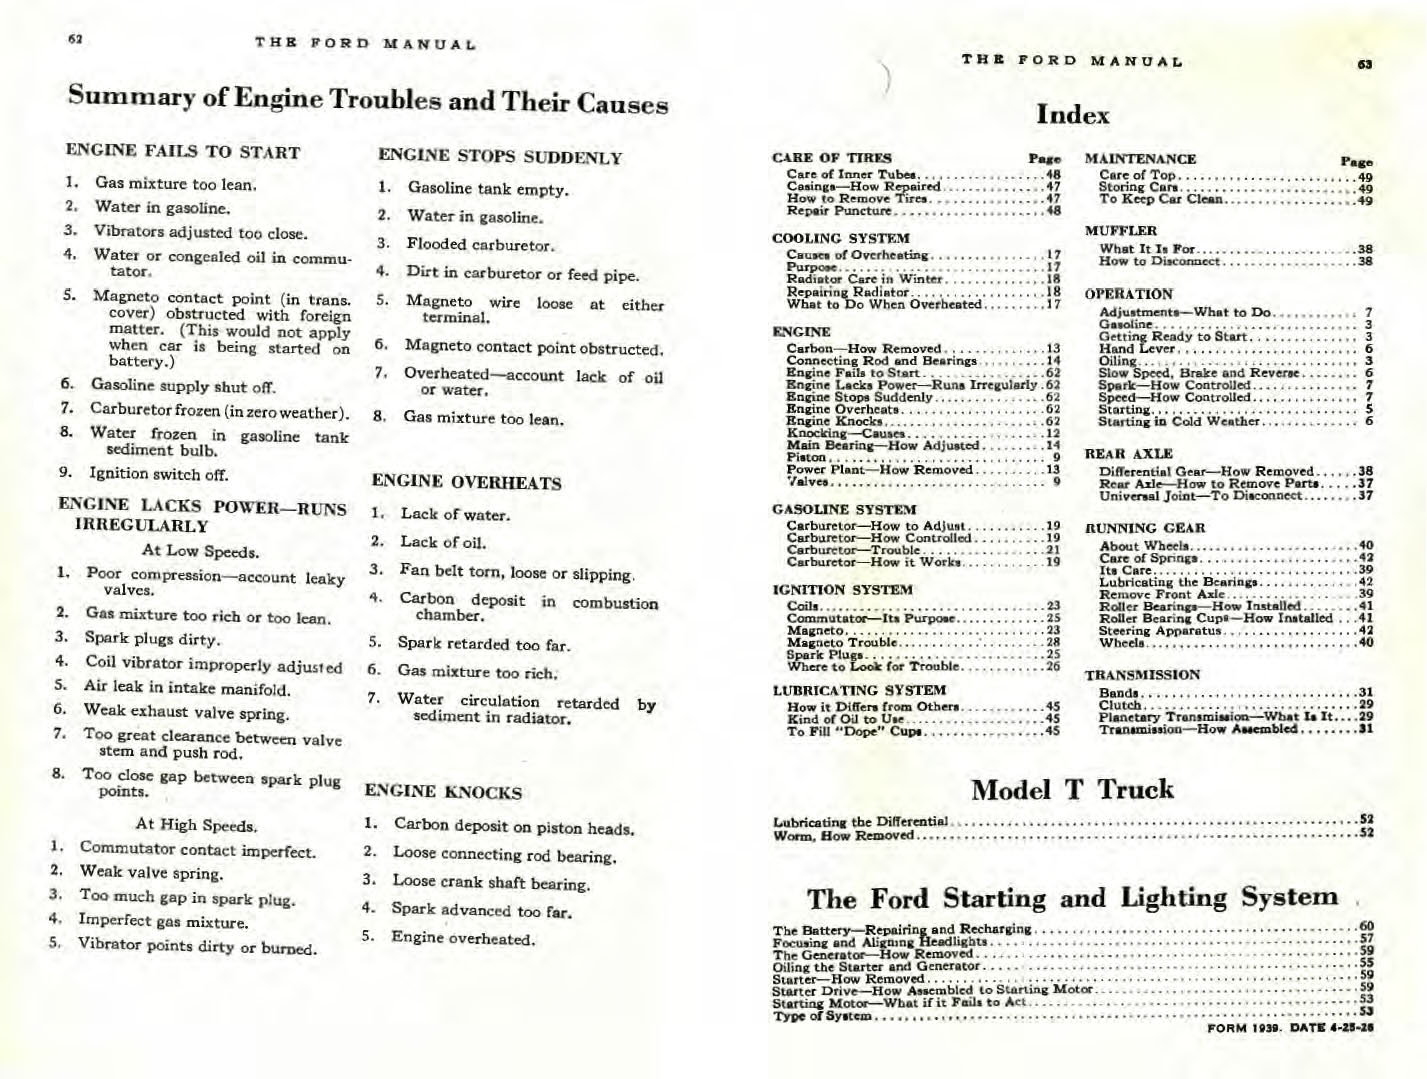 n_1926 Ford Owners Manual-62-63.jpg